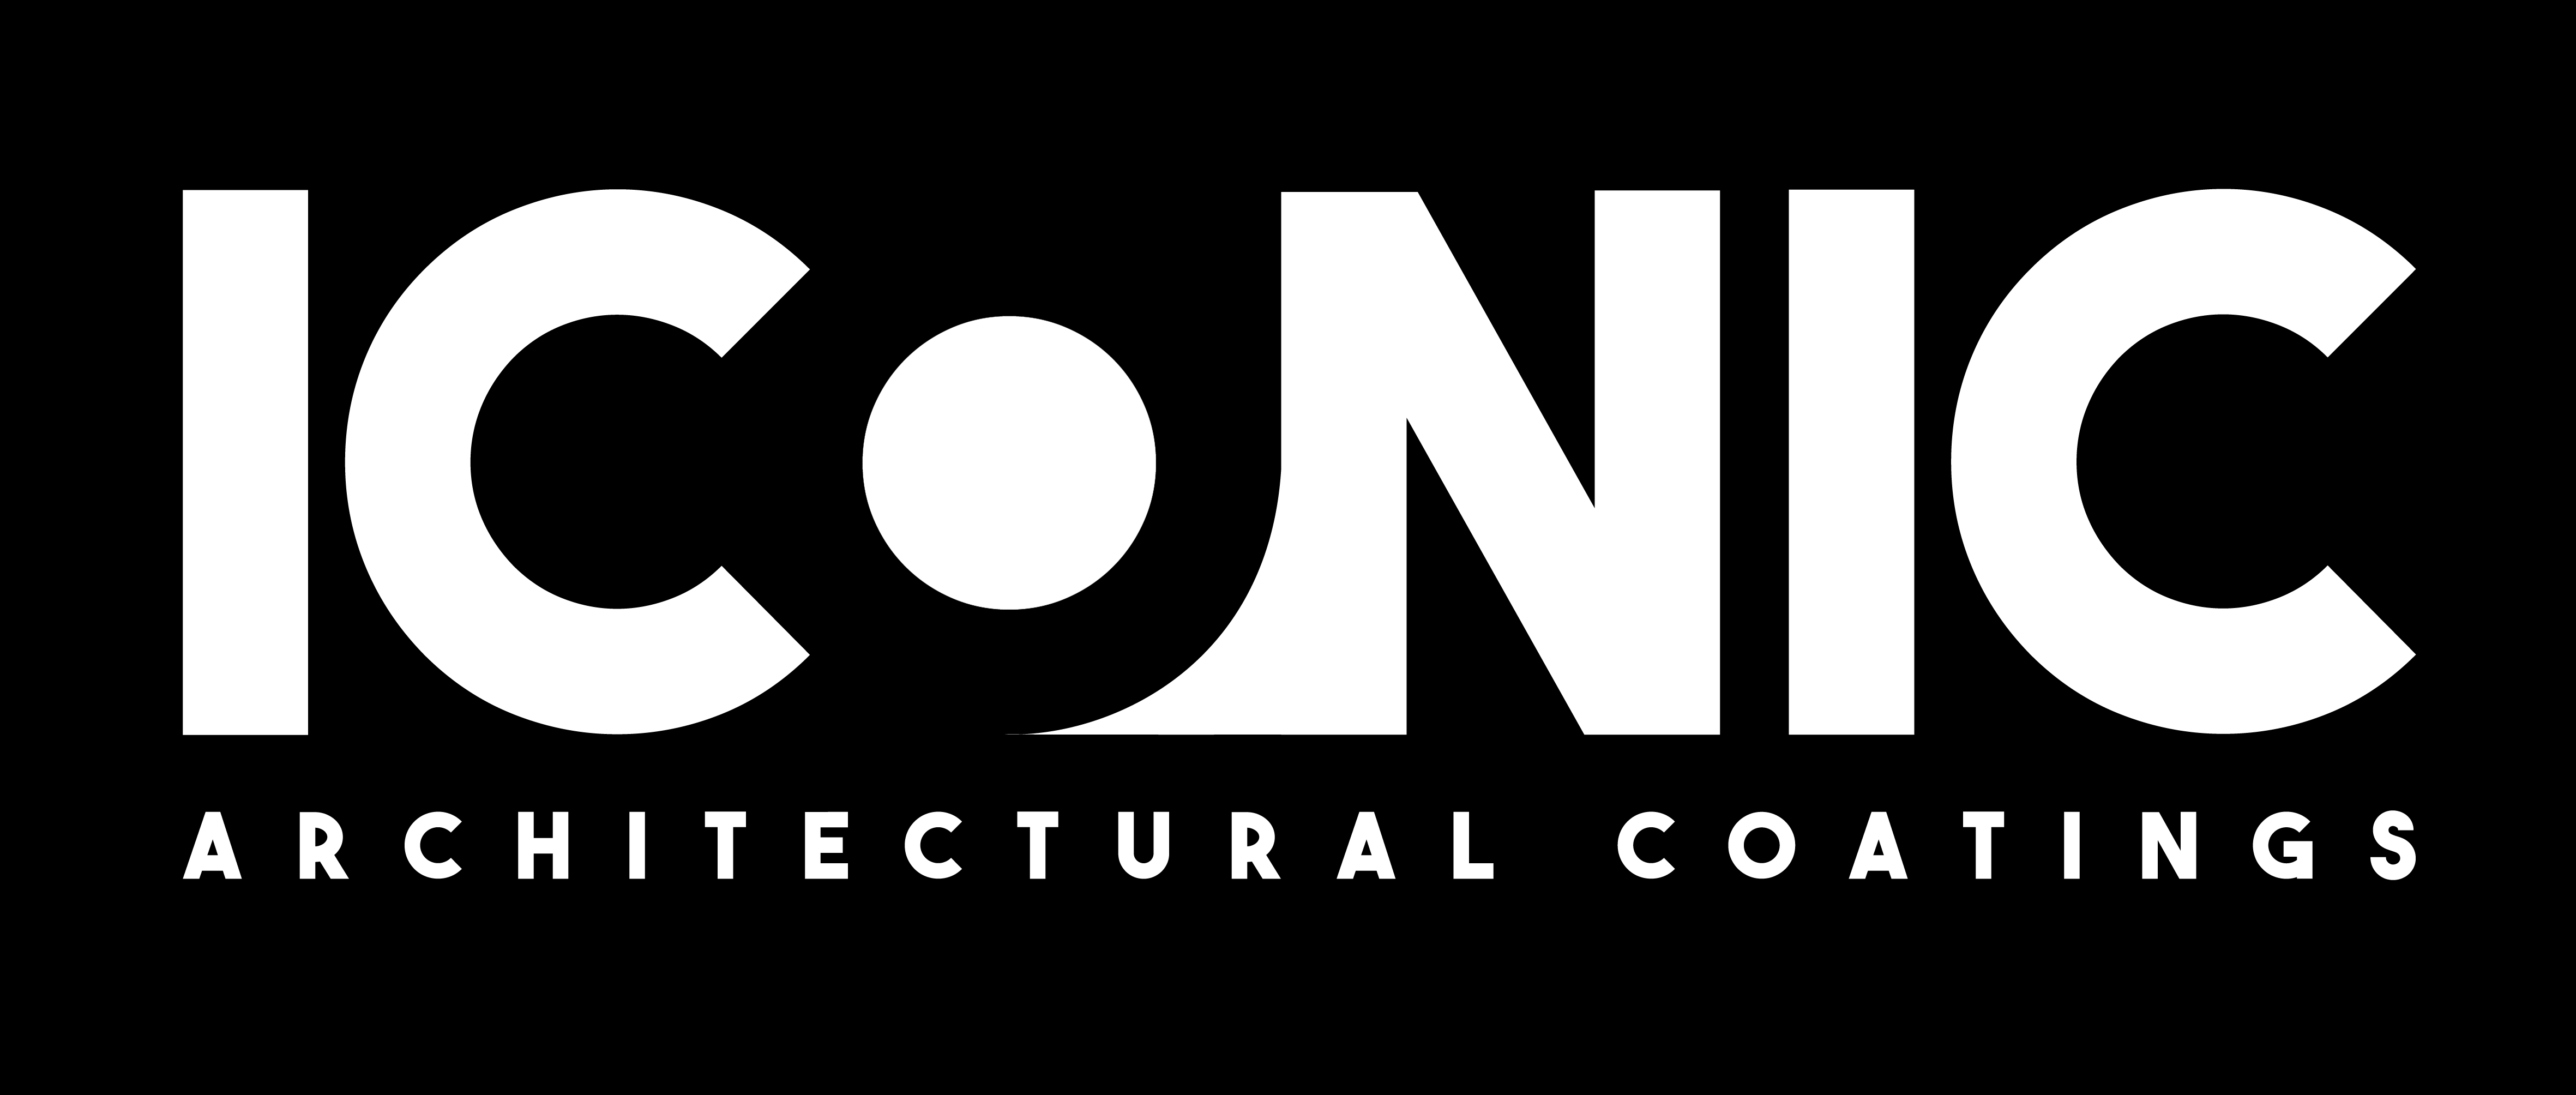 Iconic Architectural Coatings logo